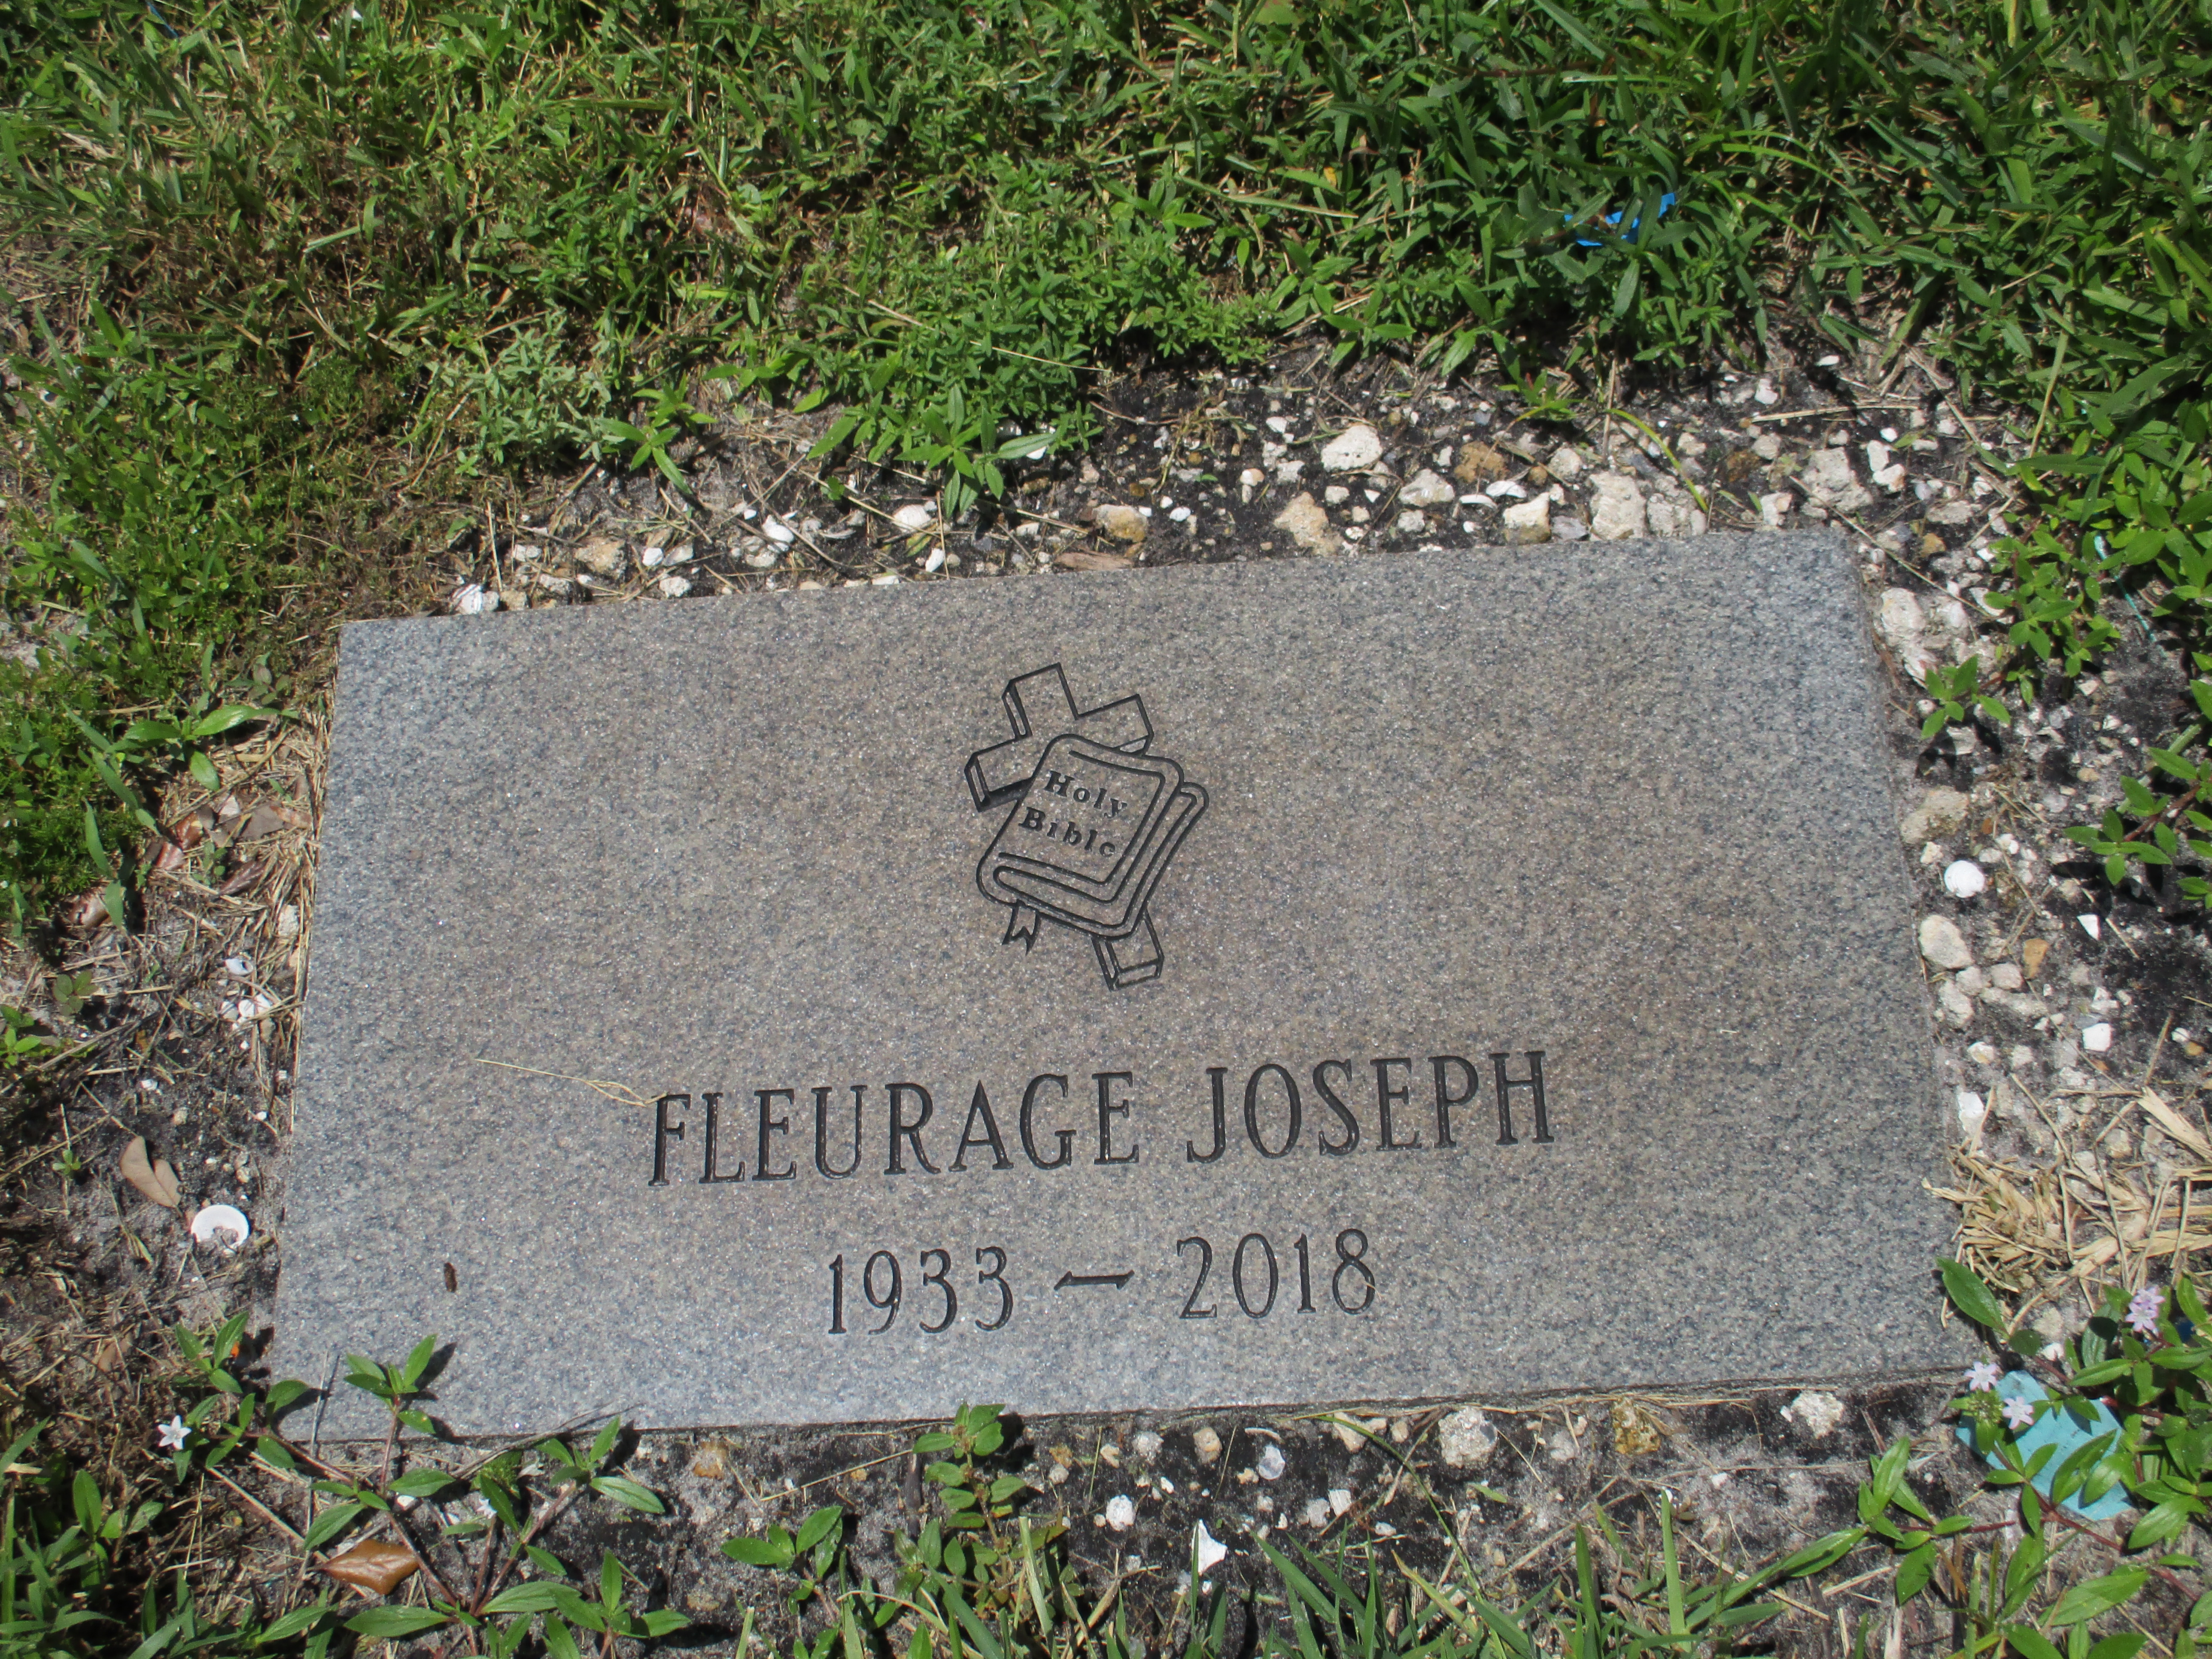 Fleurage Joseph